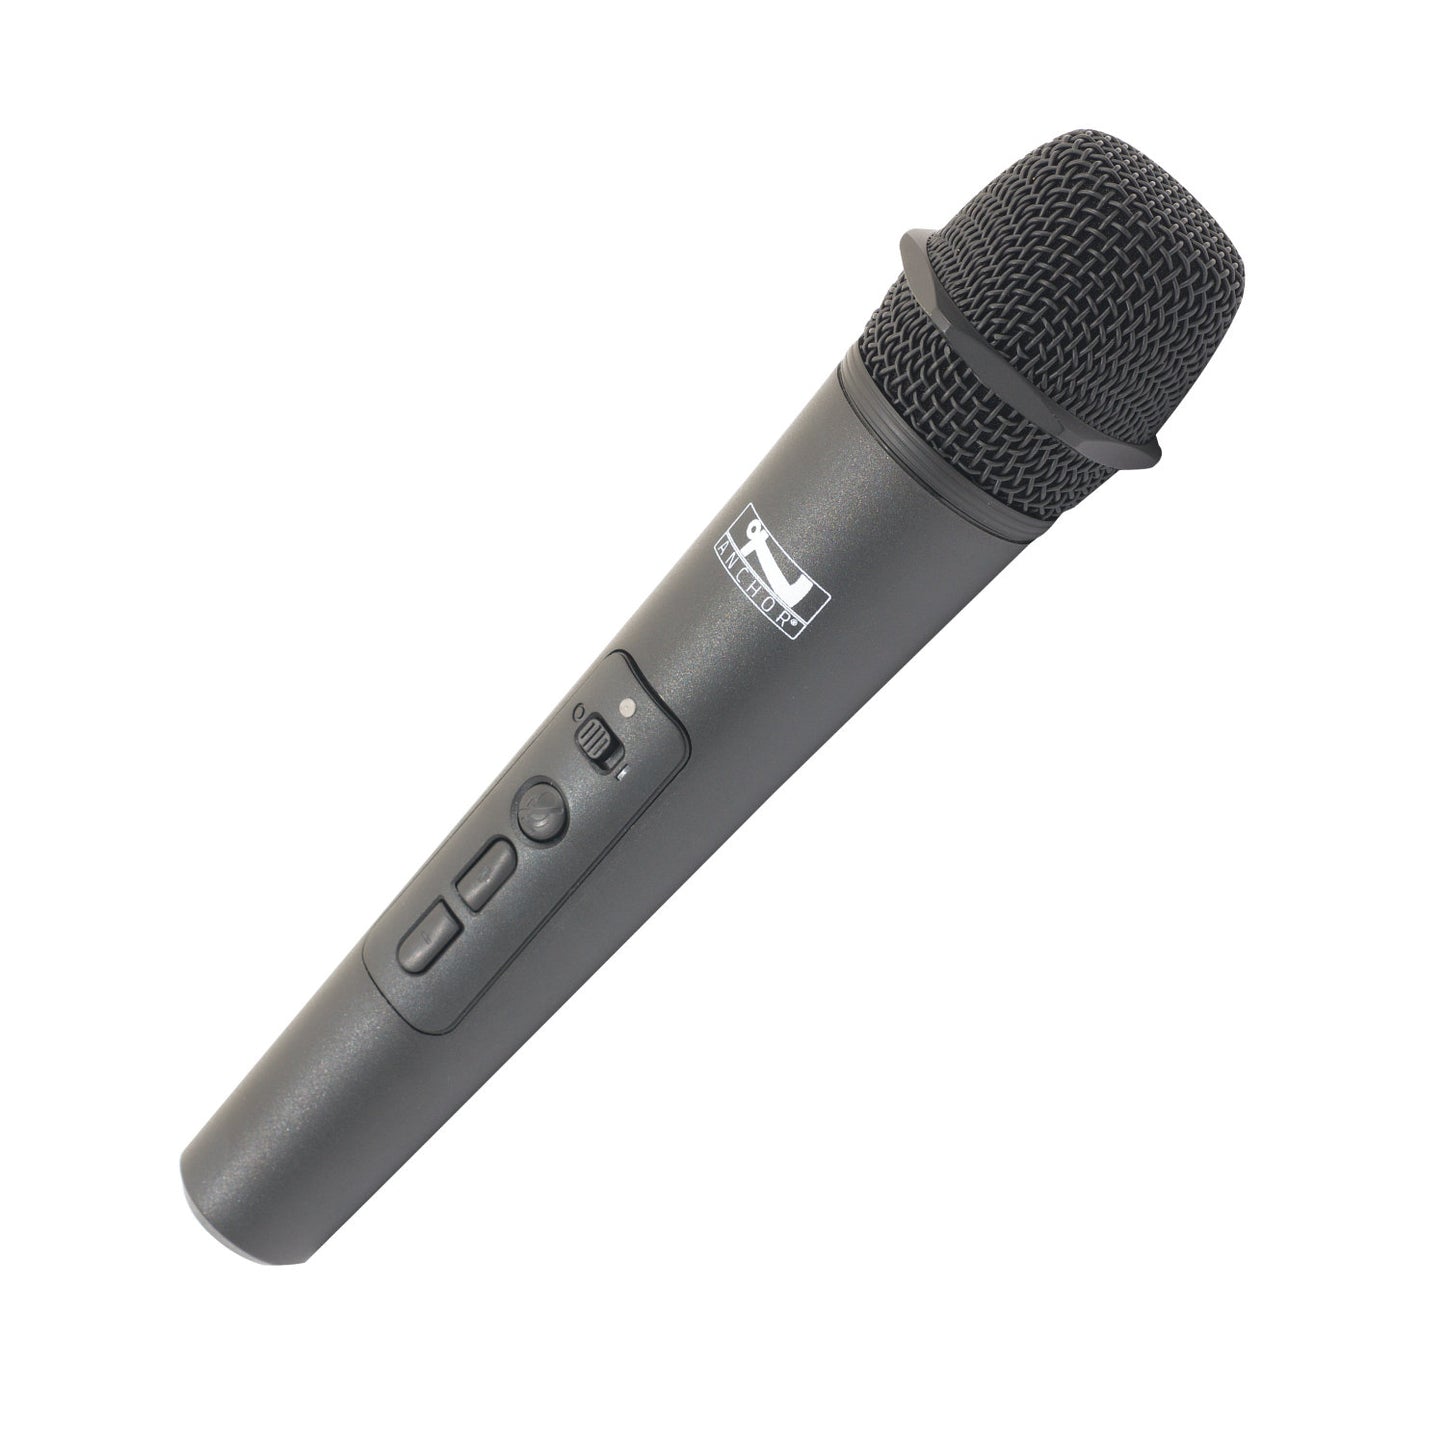 Wireless handheld mic (1.9 GHz)